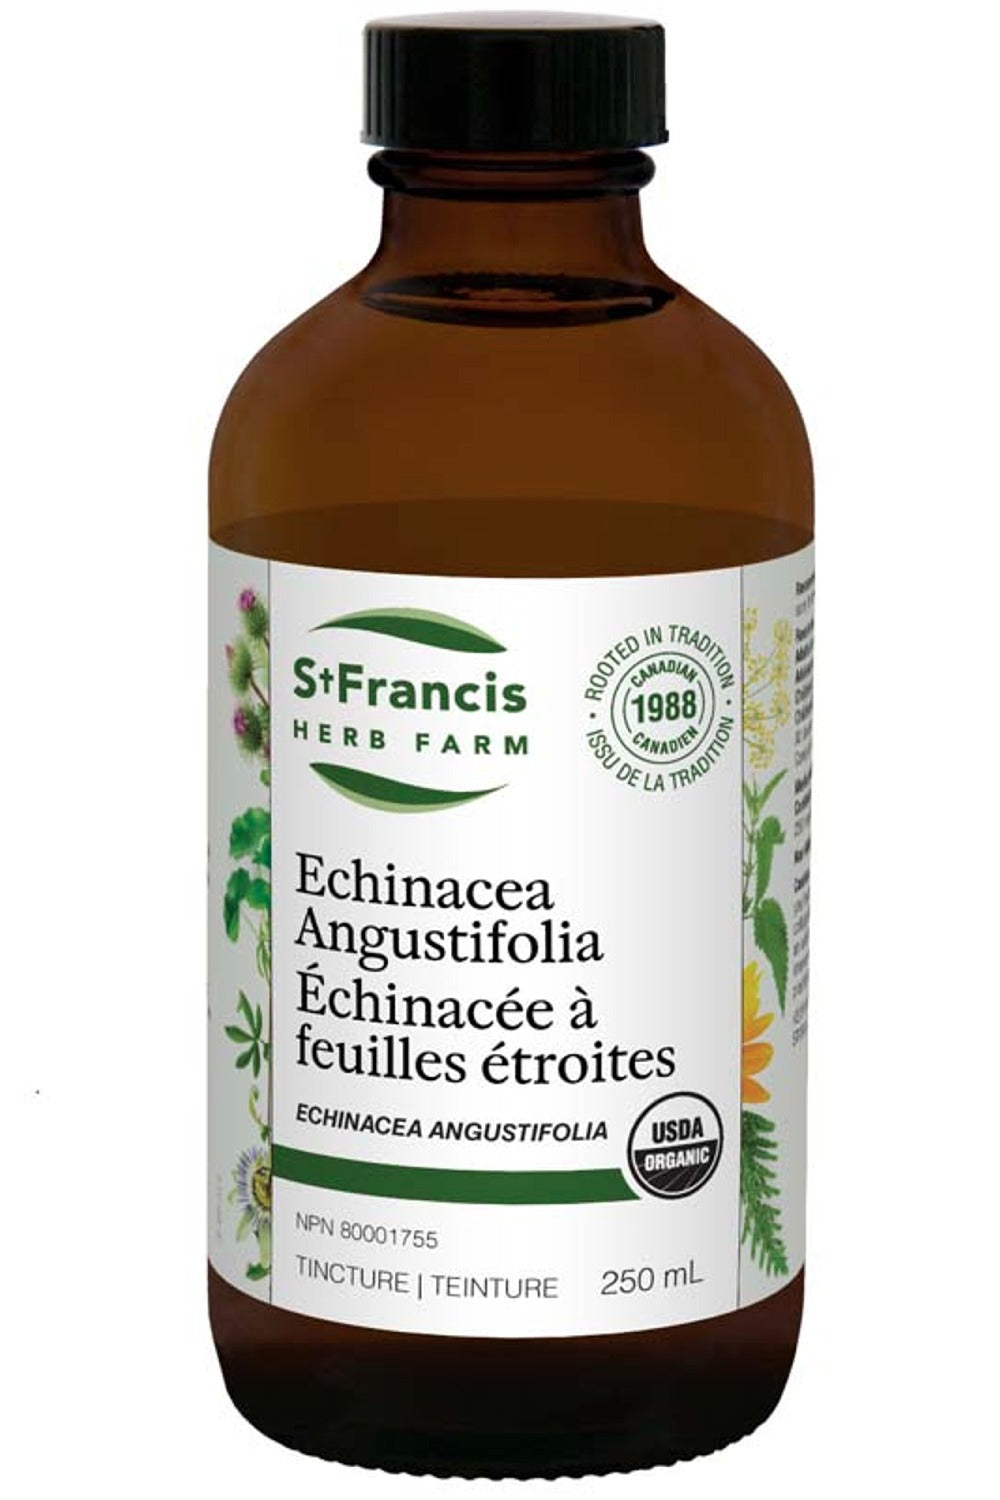 ST FRANCIS HERB FARM Echinacea Angustifolia (250 ml)